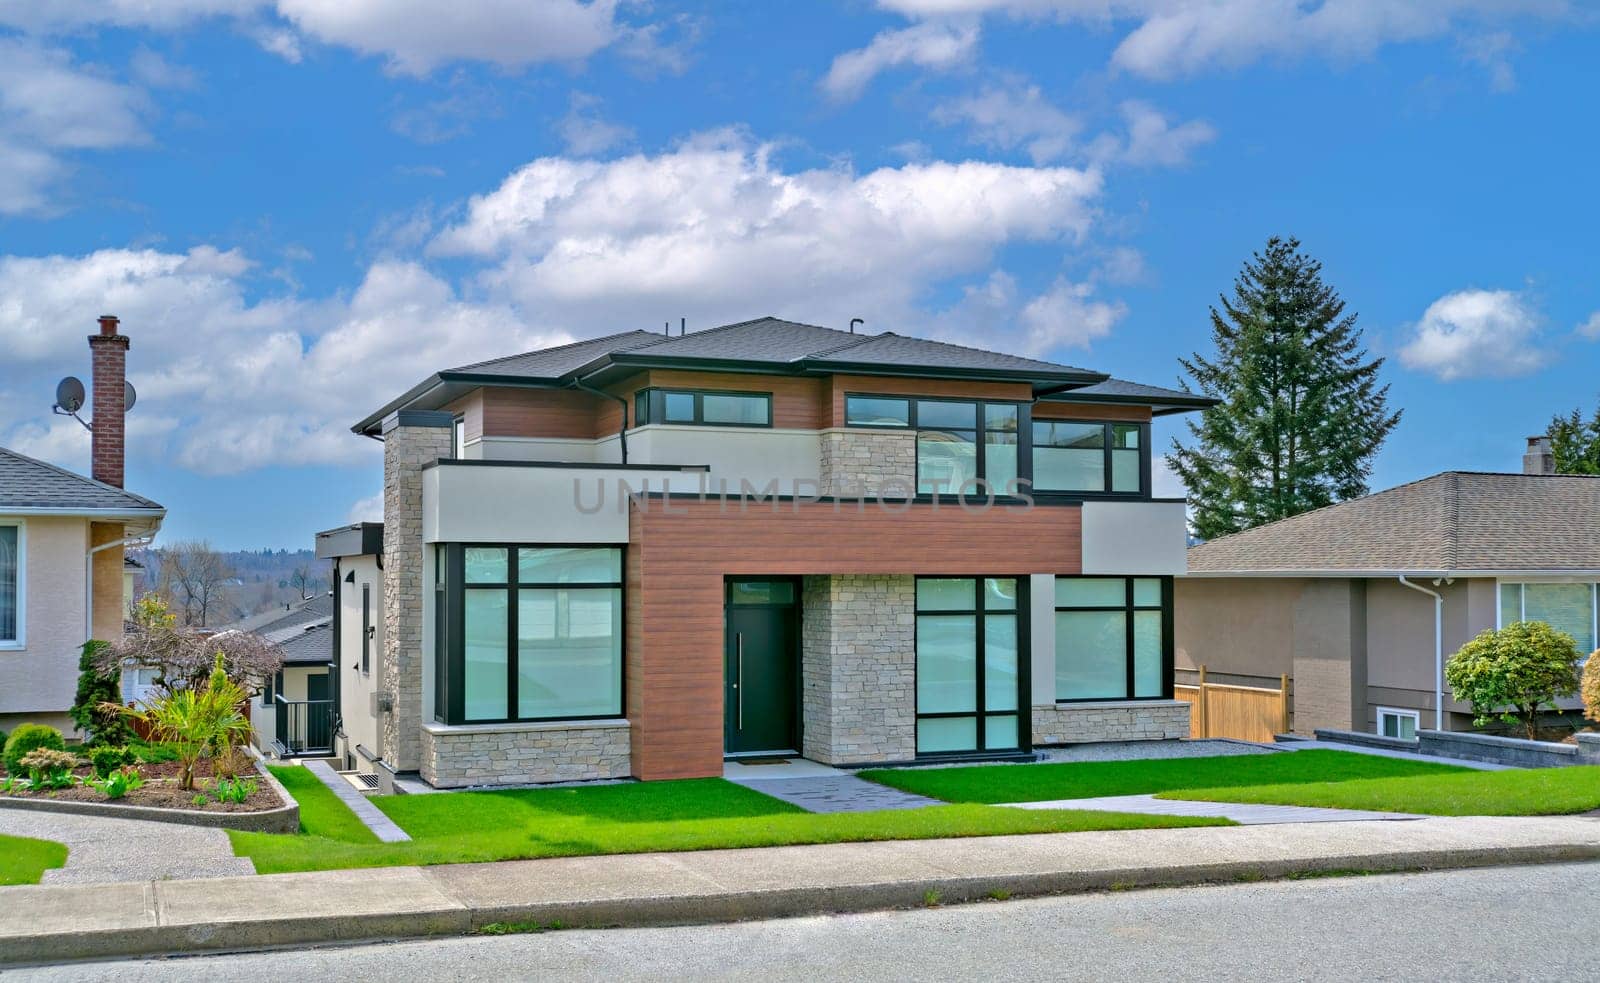 A perfect neigbourhood. Modern family house on cloudy sky background